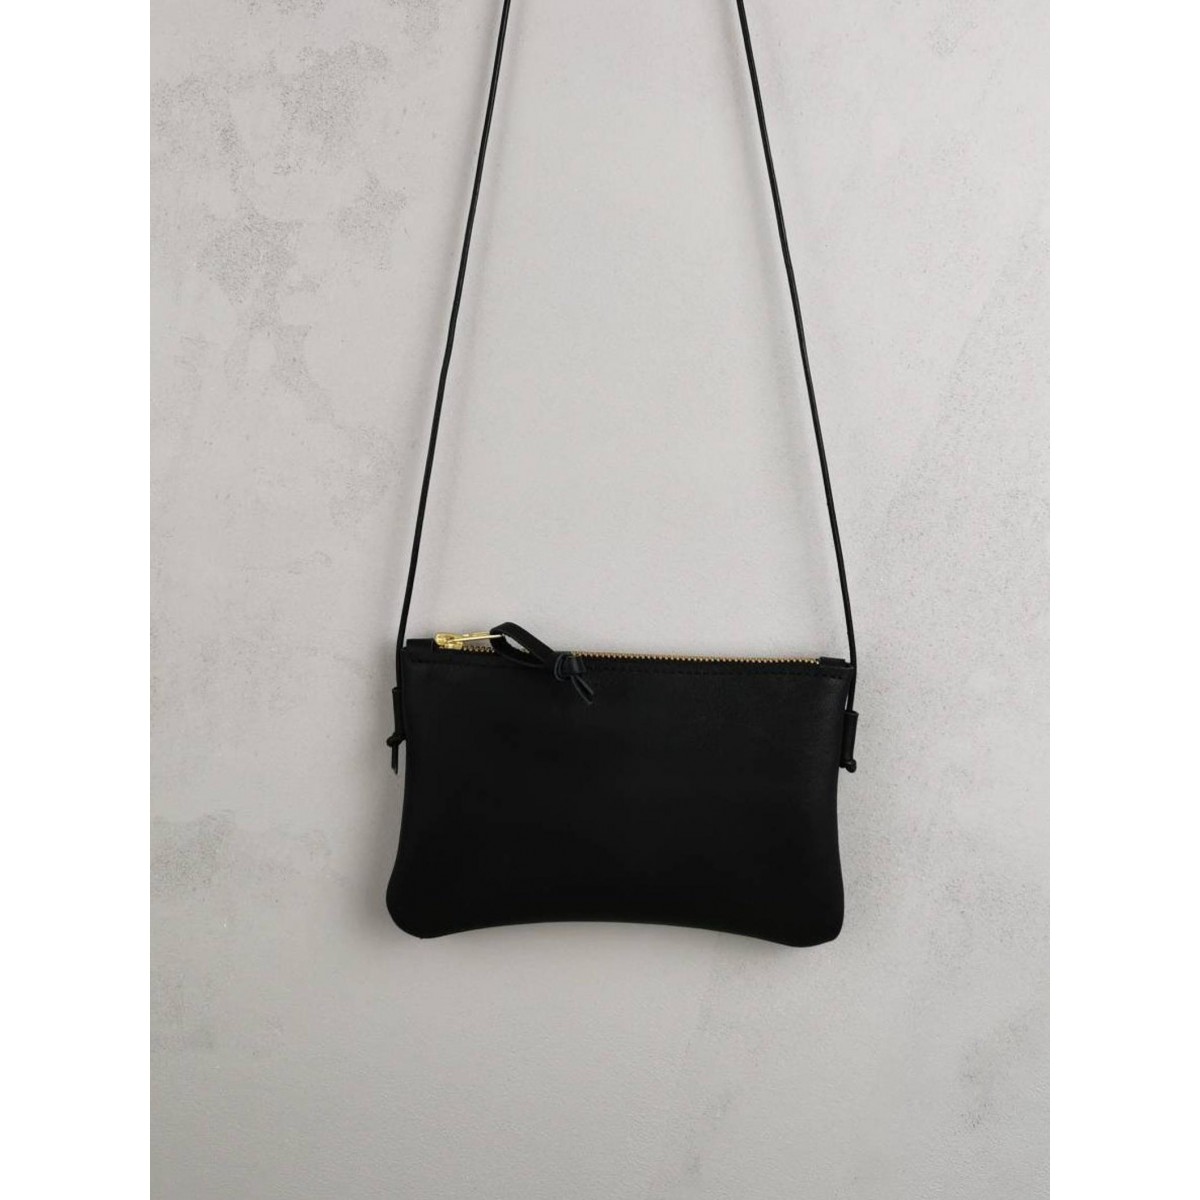 Minitasche // echt Leder schwarz // Smartphonetasche // Handtasche // Tasche zum Reisen // Ledertasche schwarz // Minibag